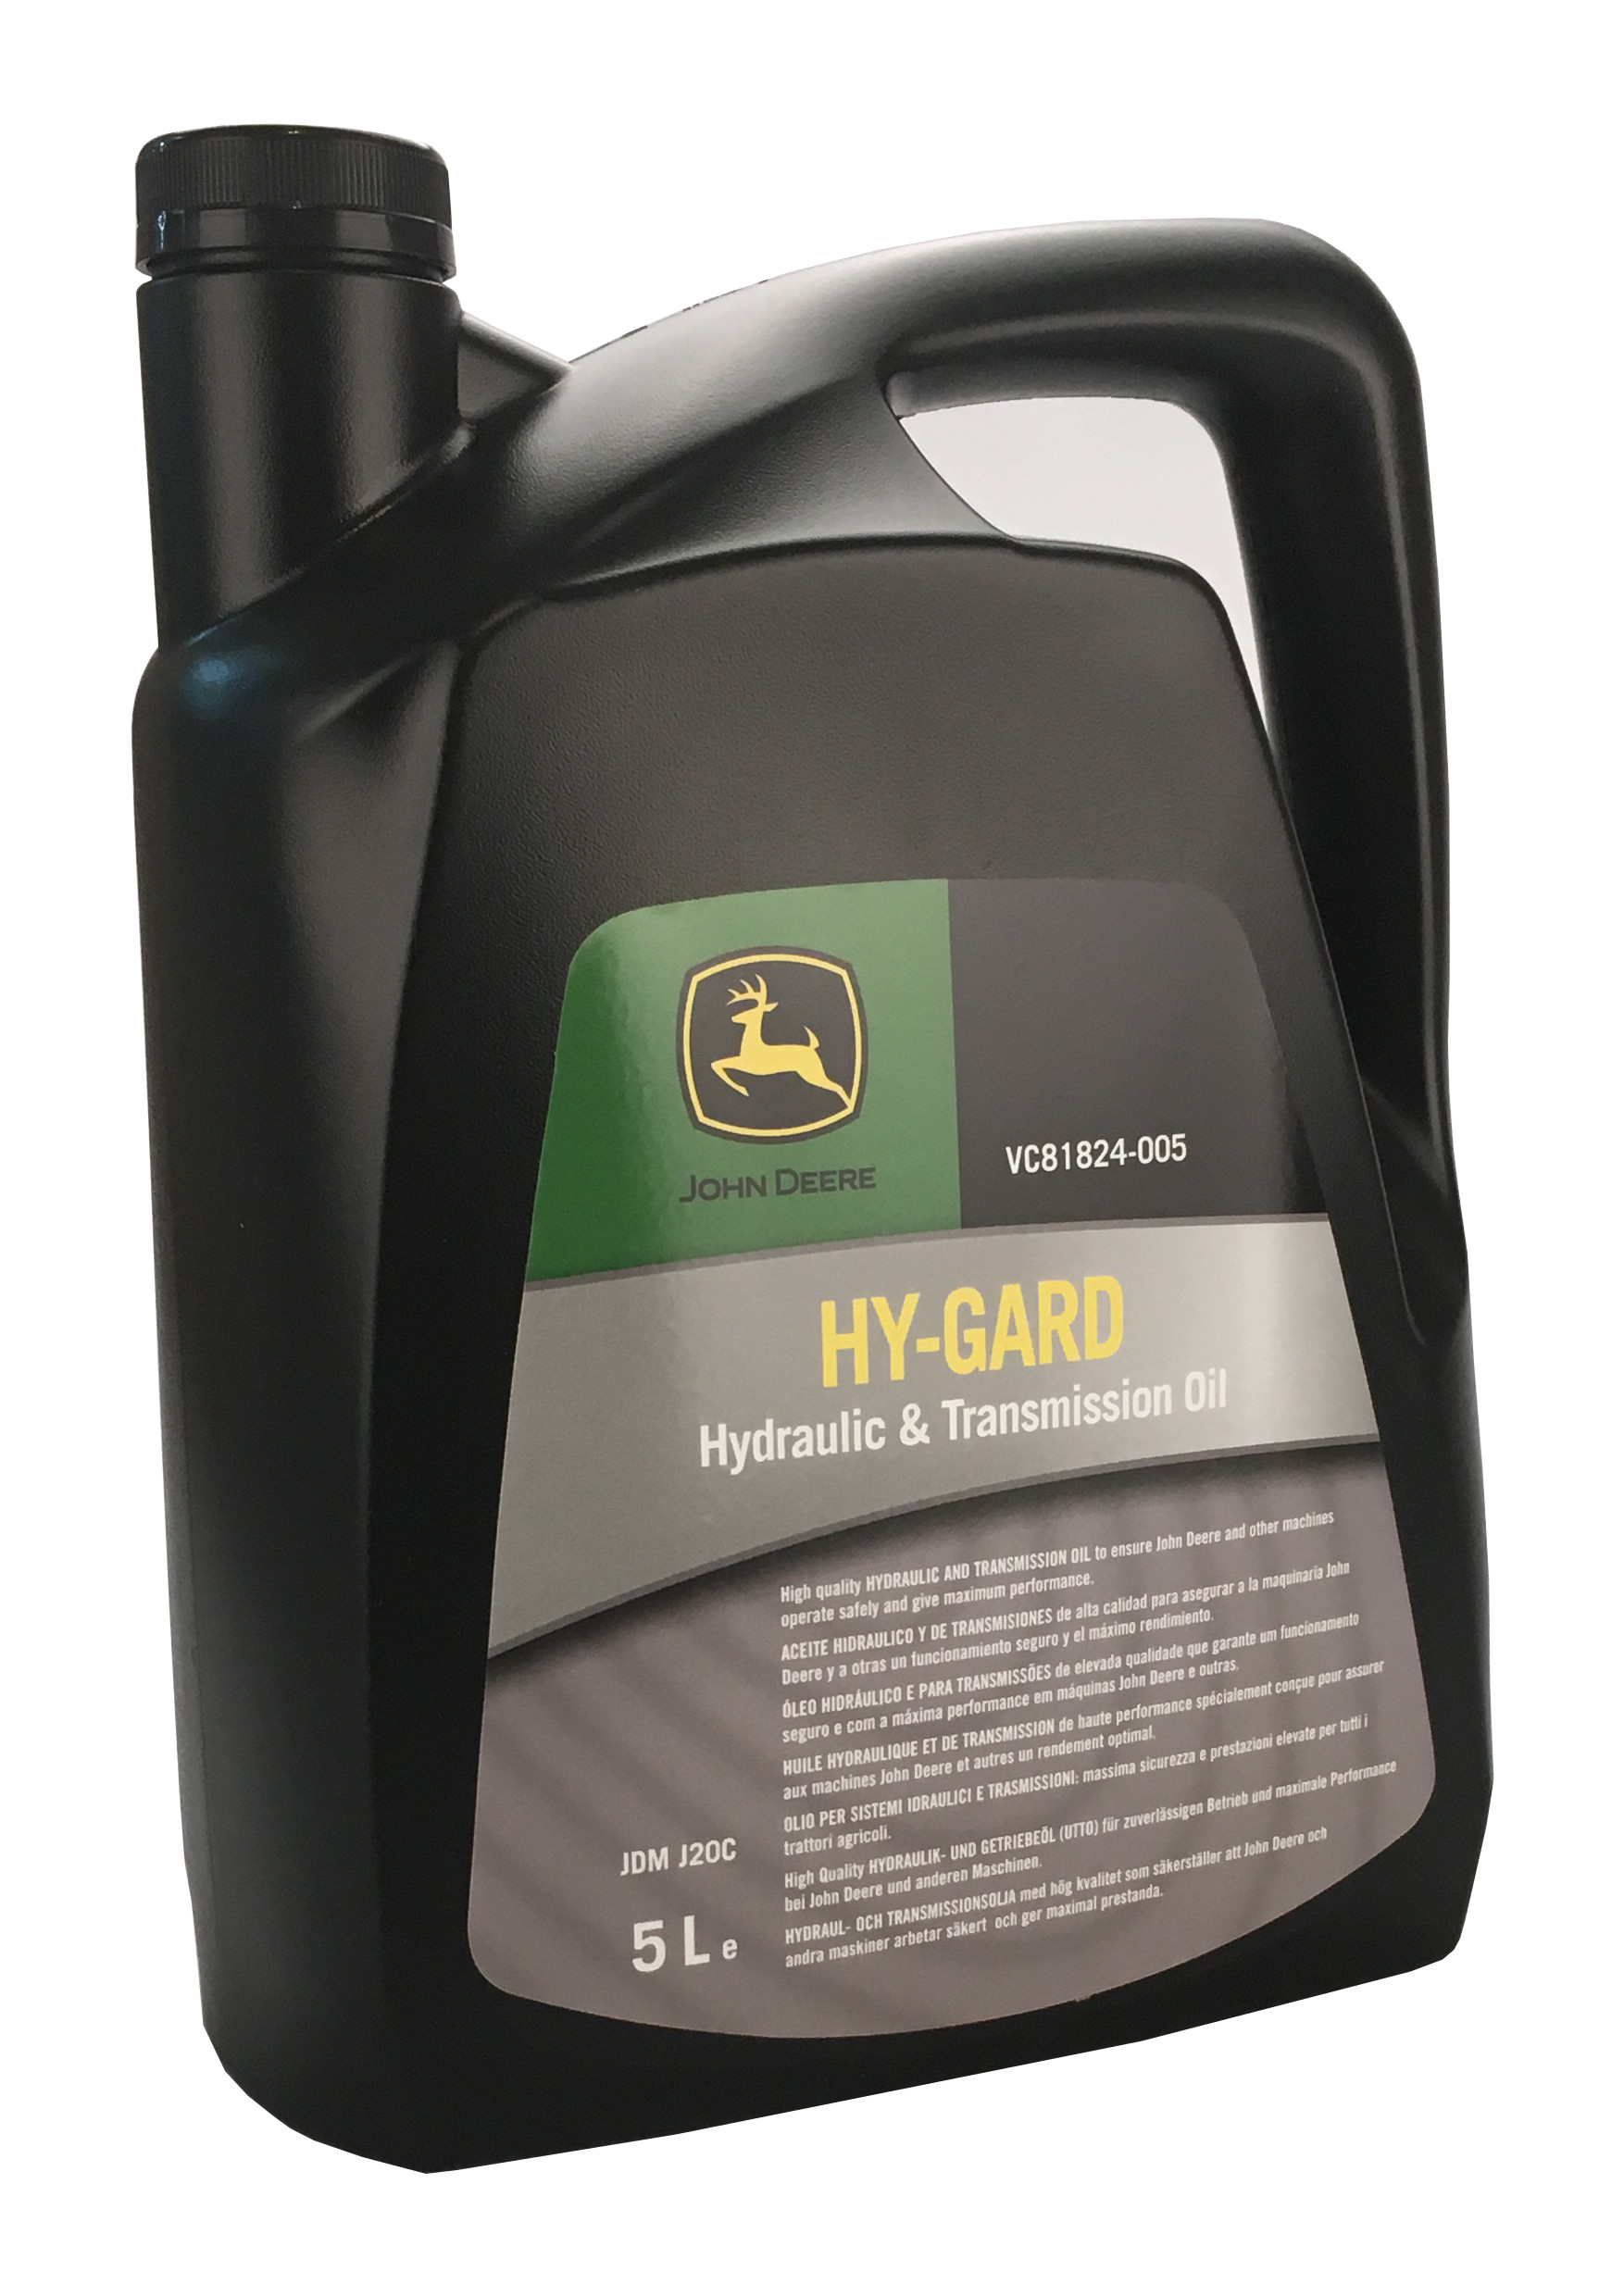 John Deere Hy-Gard Getriebeöl und Hydrauliköl 5 Liter